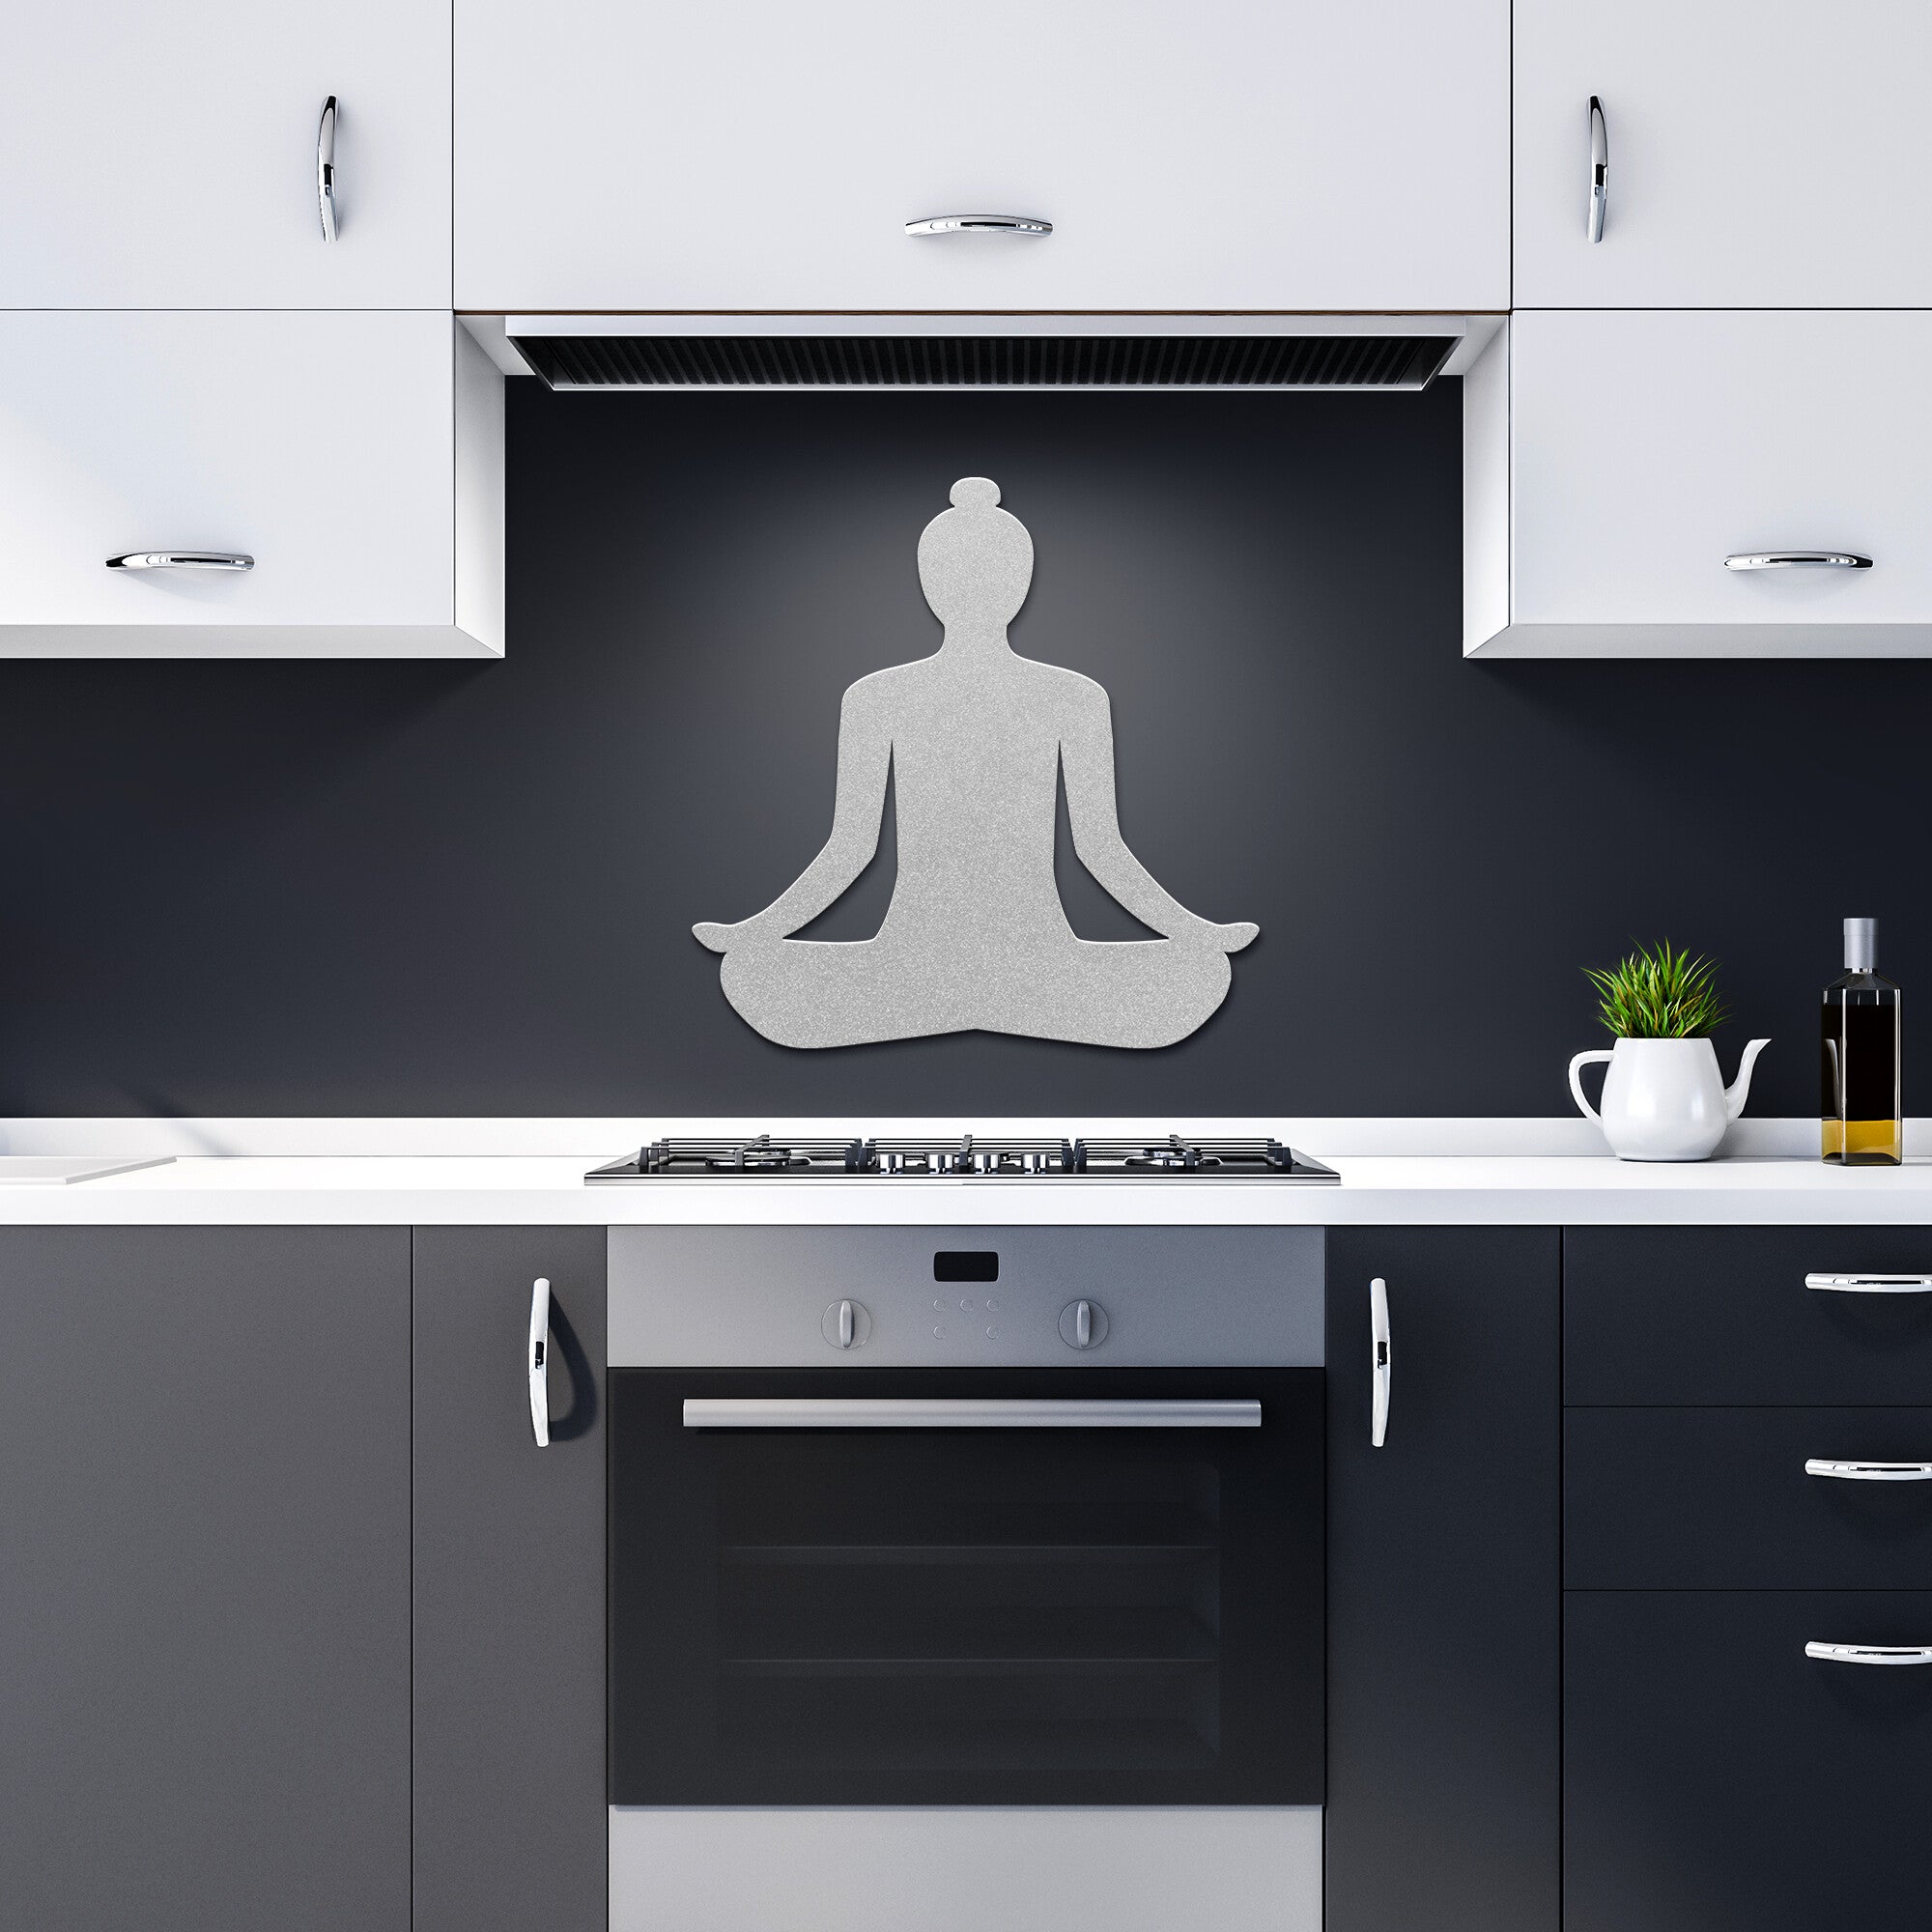 lotus position meditation and yoga metal cut wall decor - Personal Hour 